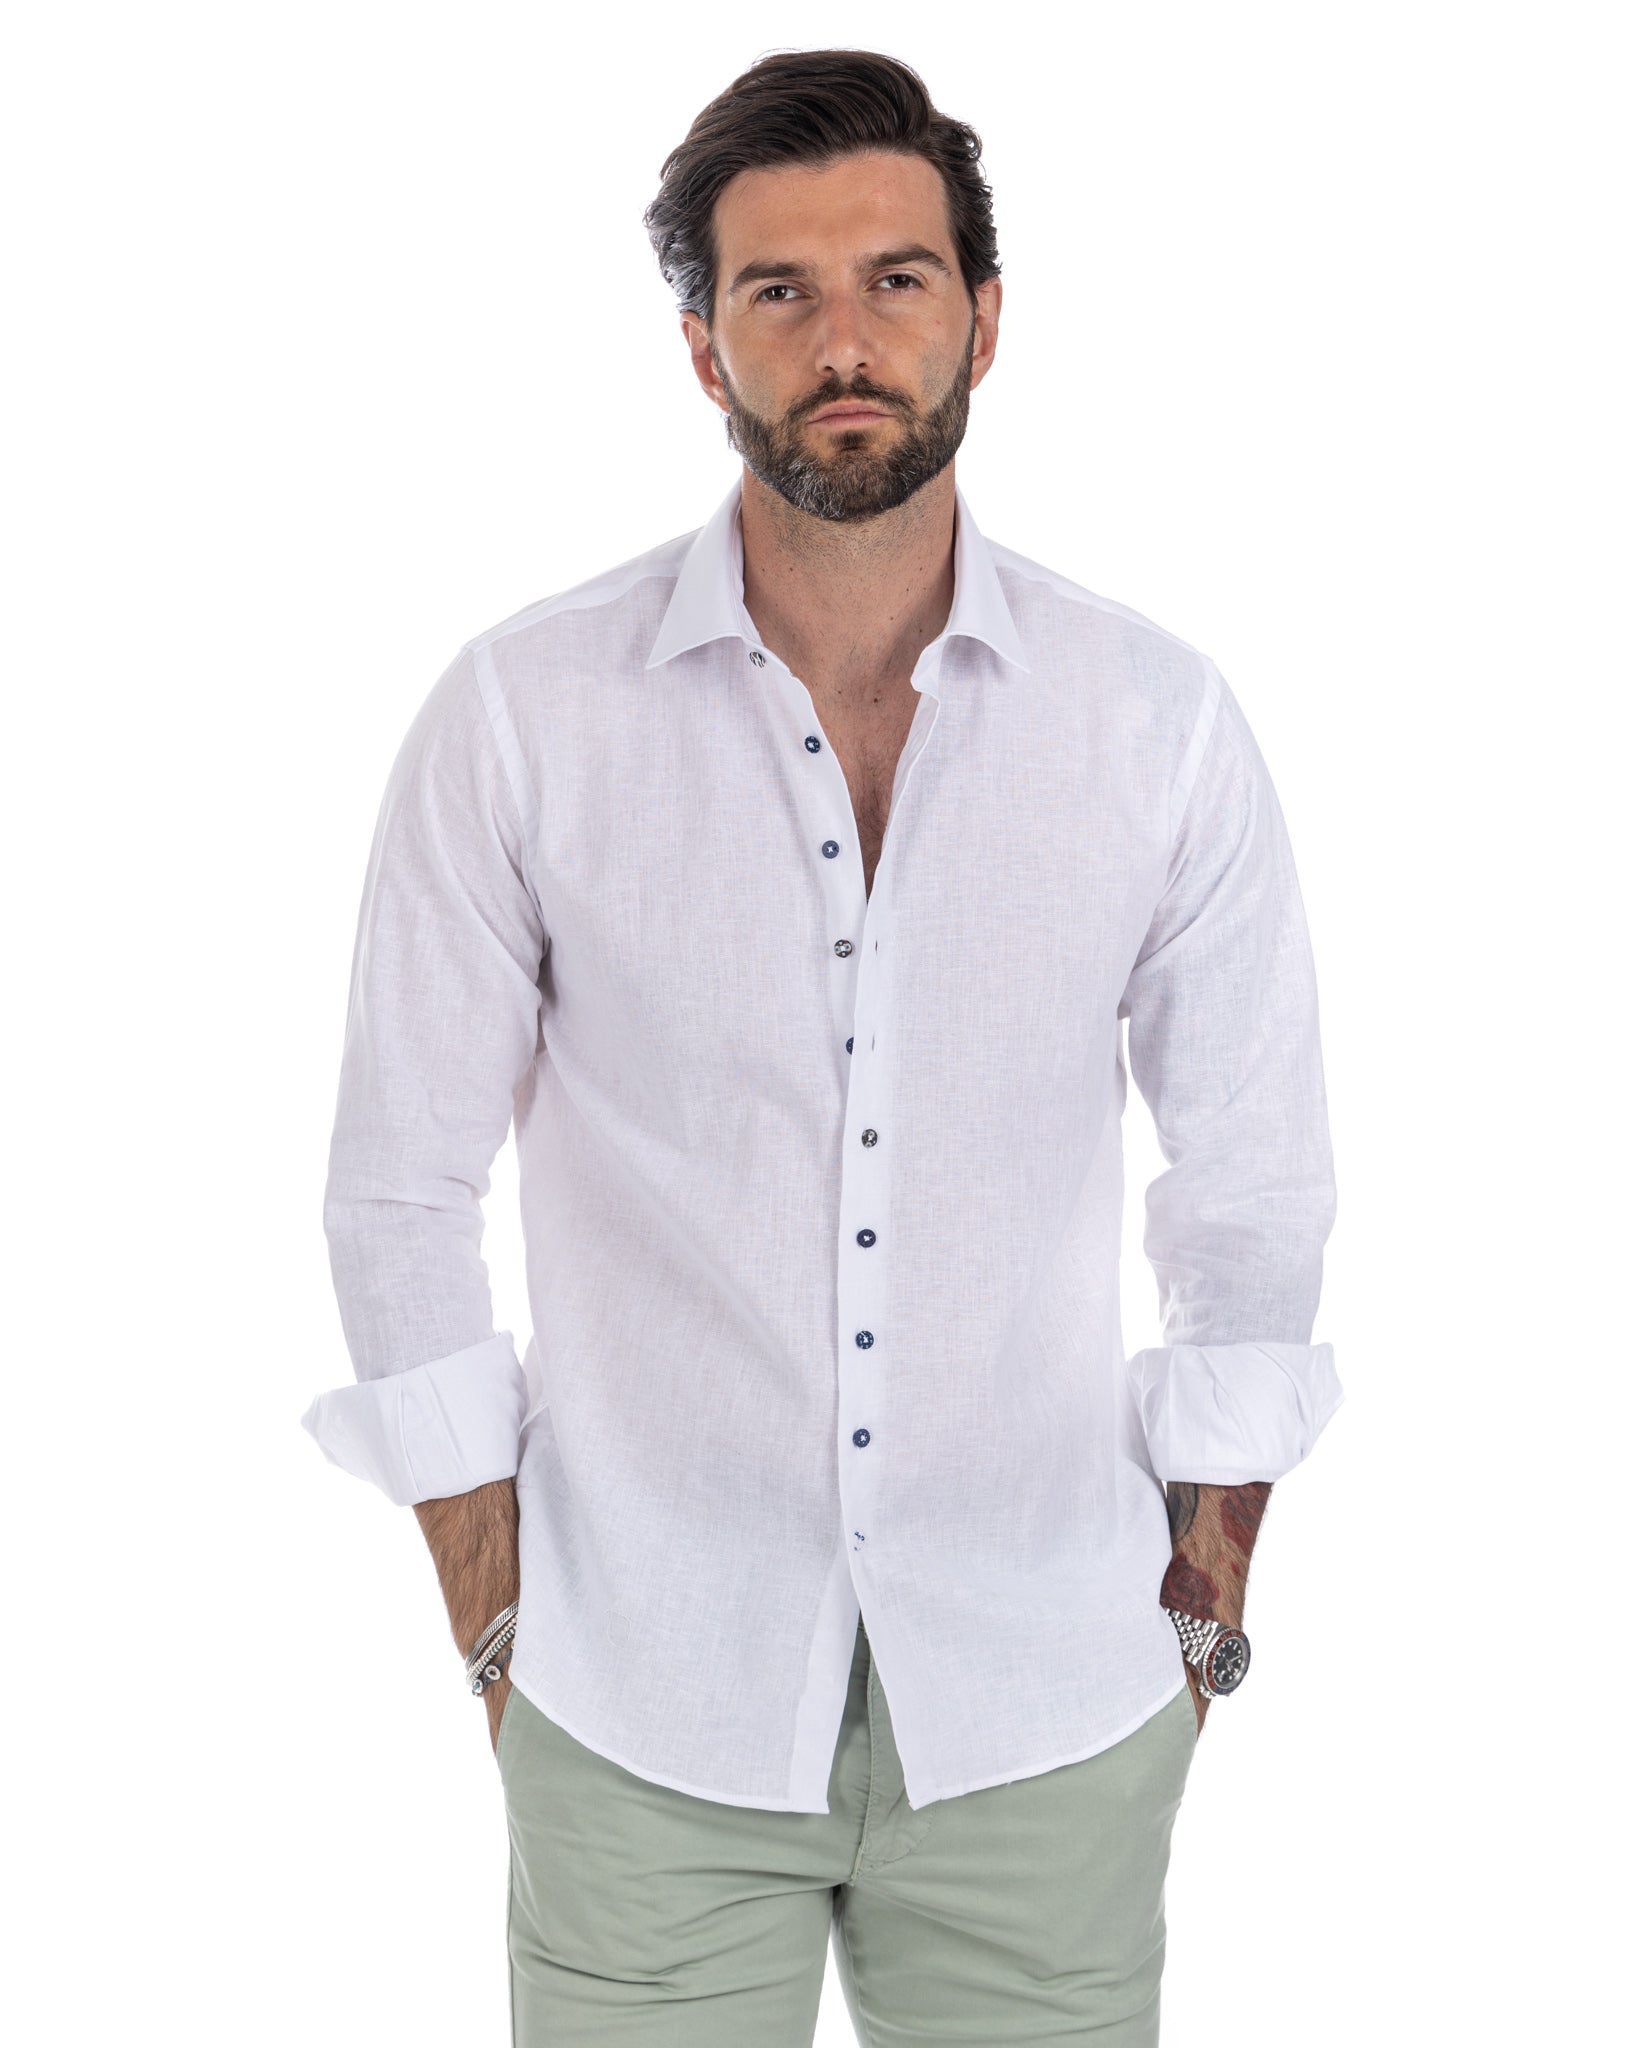 Praiano - white linen French shirt